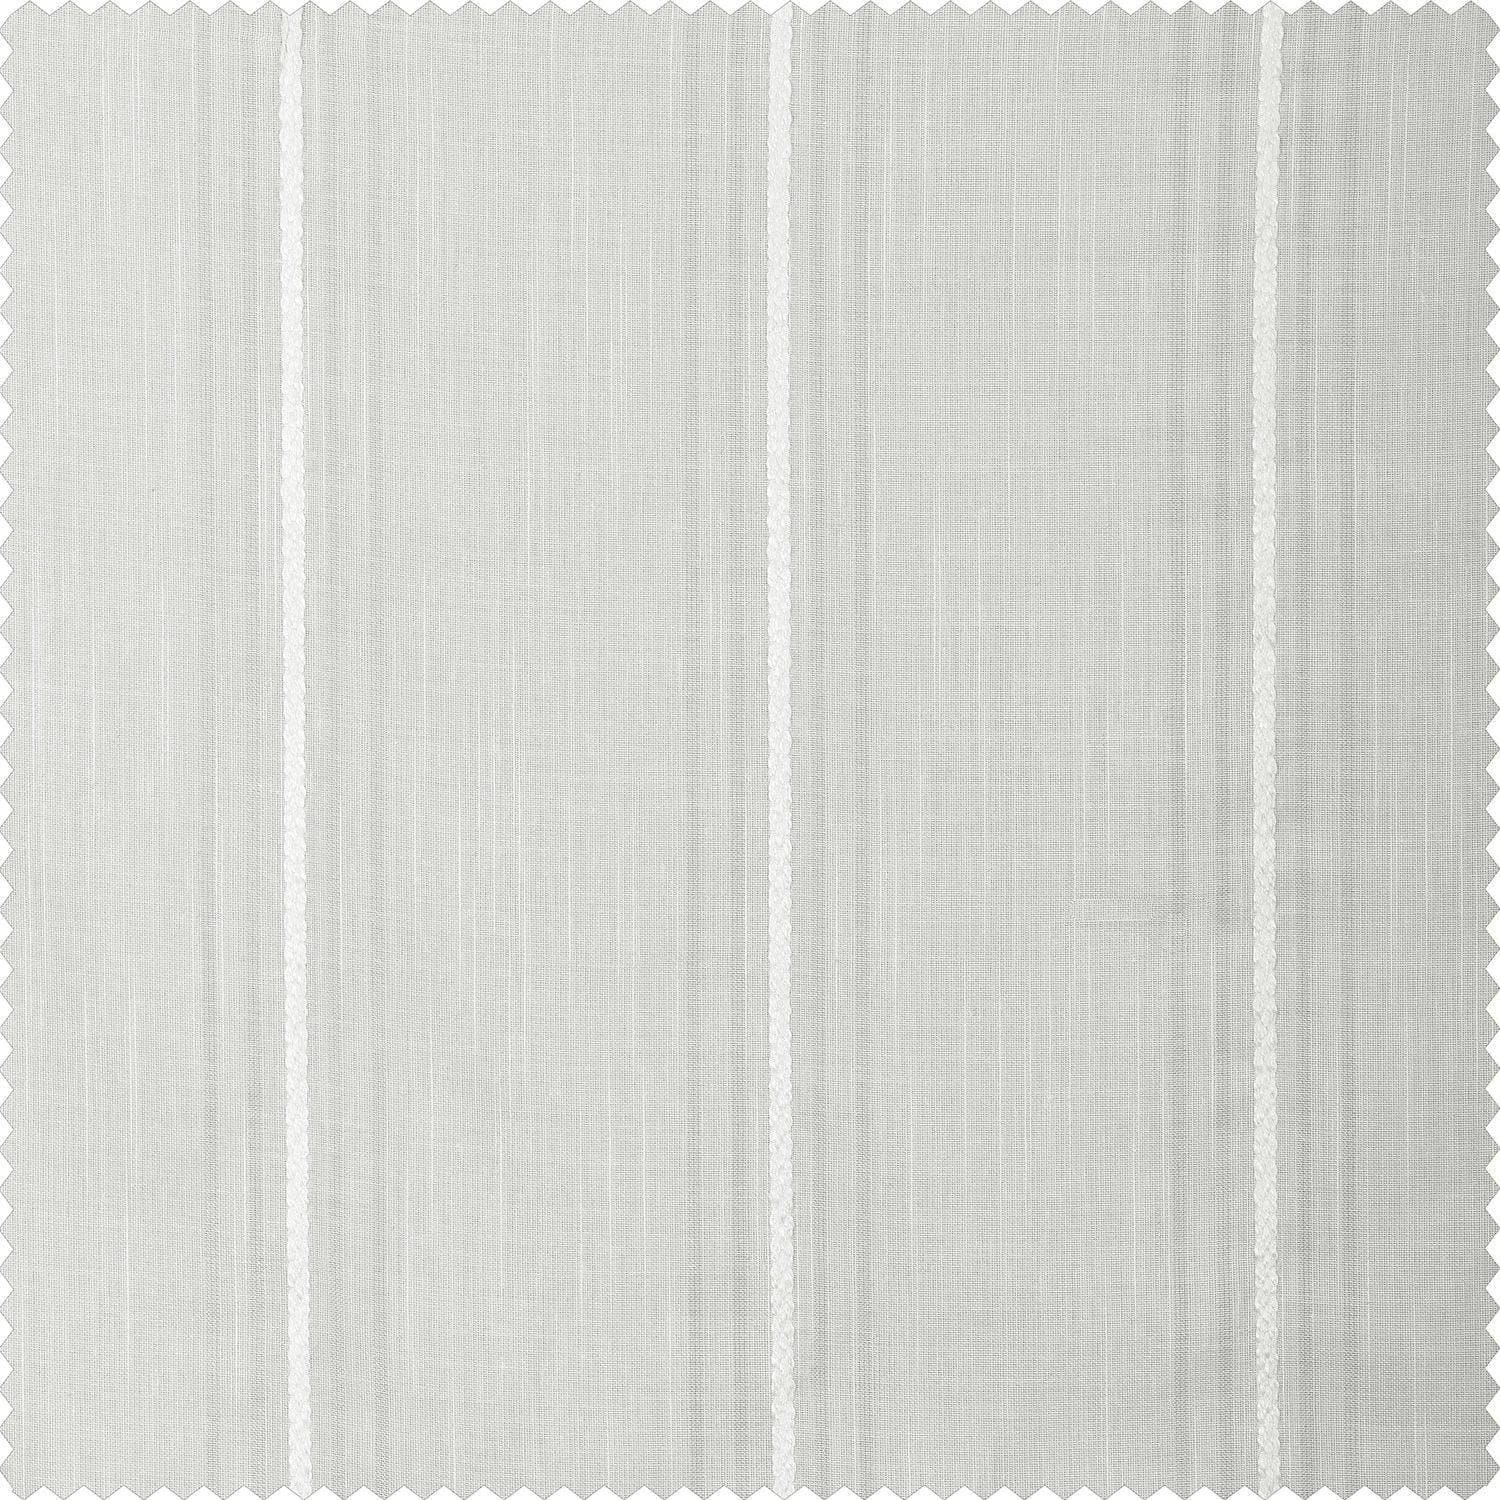 Aruba Cream Striped Striped Linen Sheer Custom Curtain